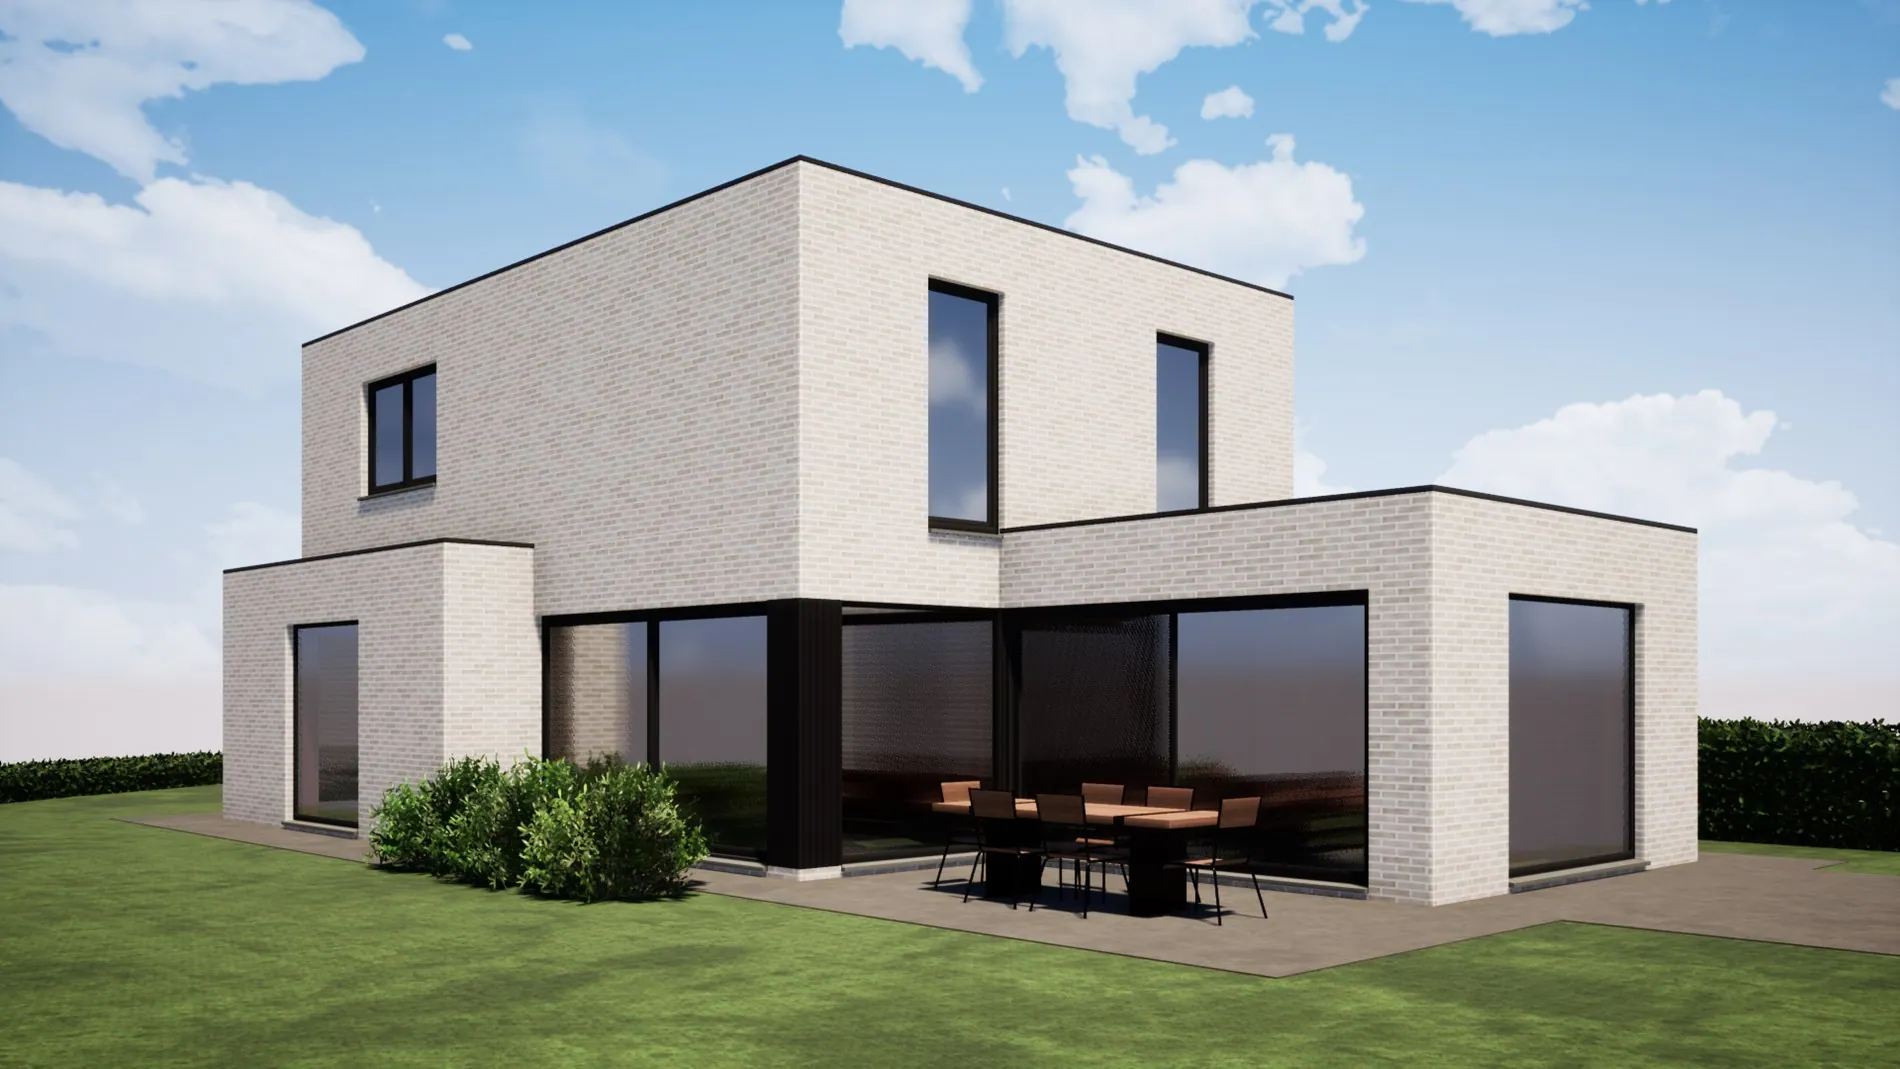 Moderne nieuwbouwvilla op  731m² in centrum Diksmuide!